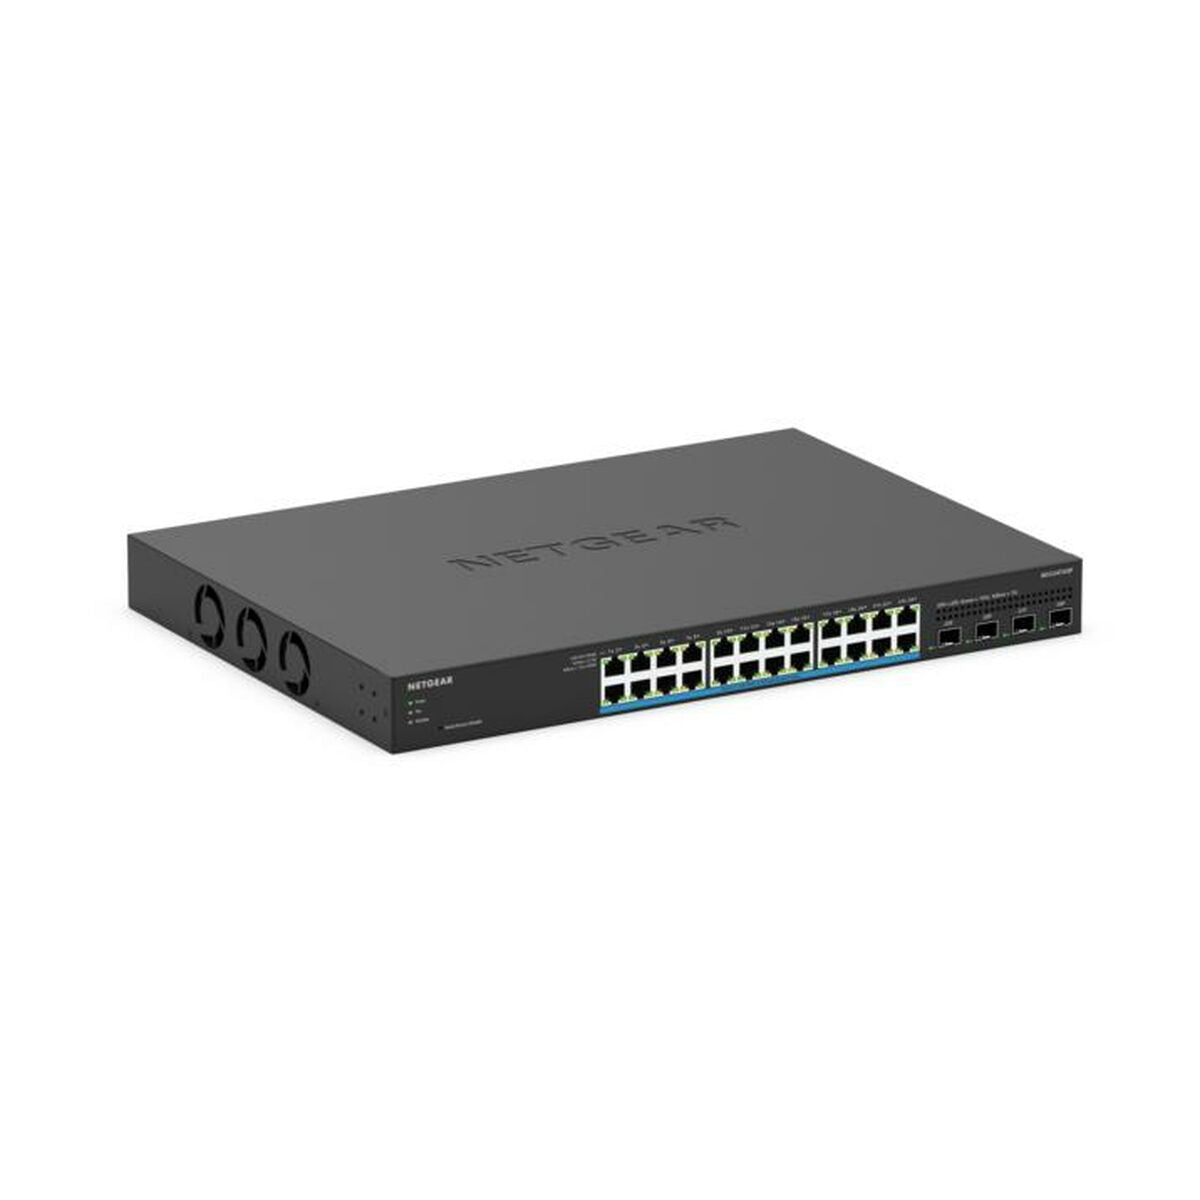 Switch Netgear MS324TXUP-100EUS-5